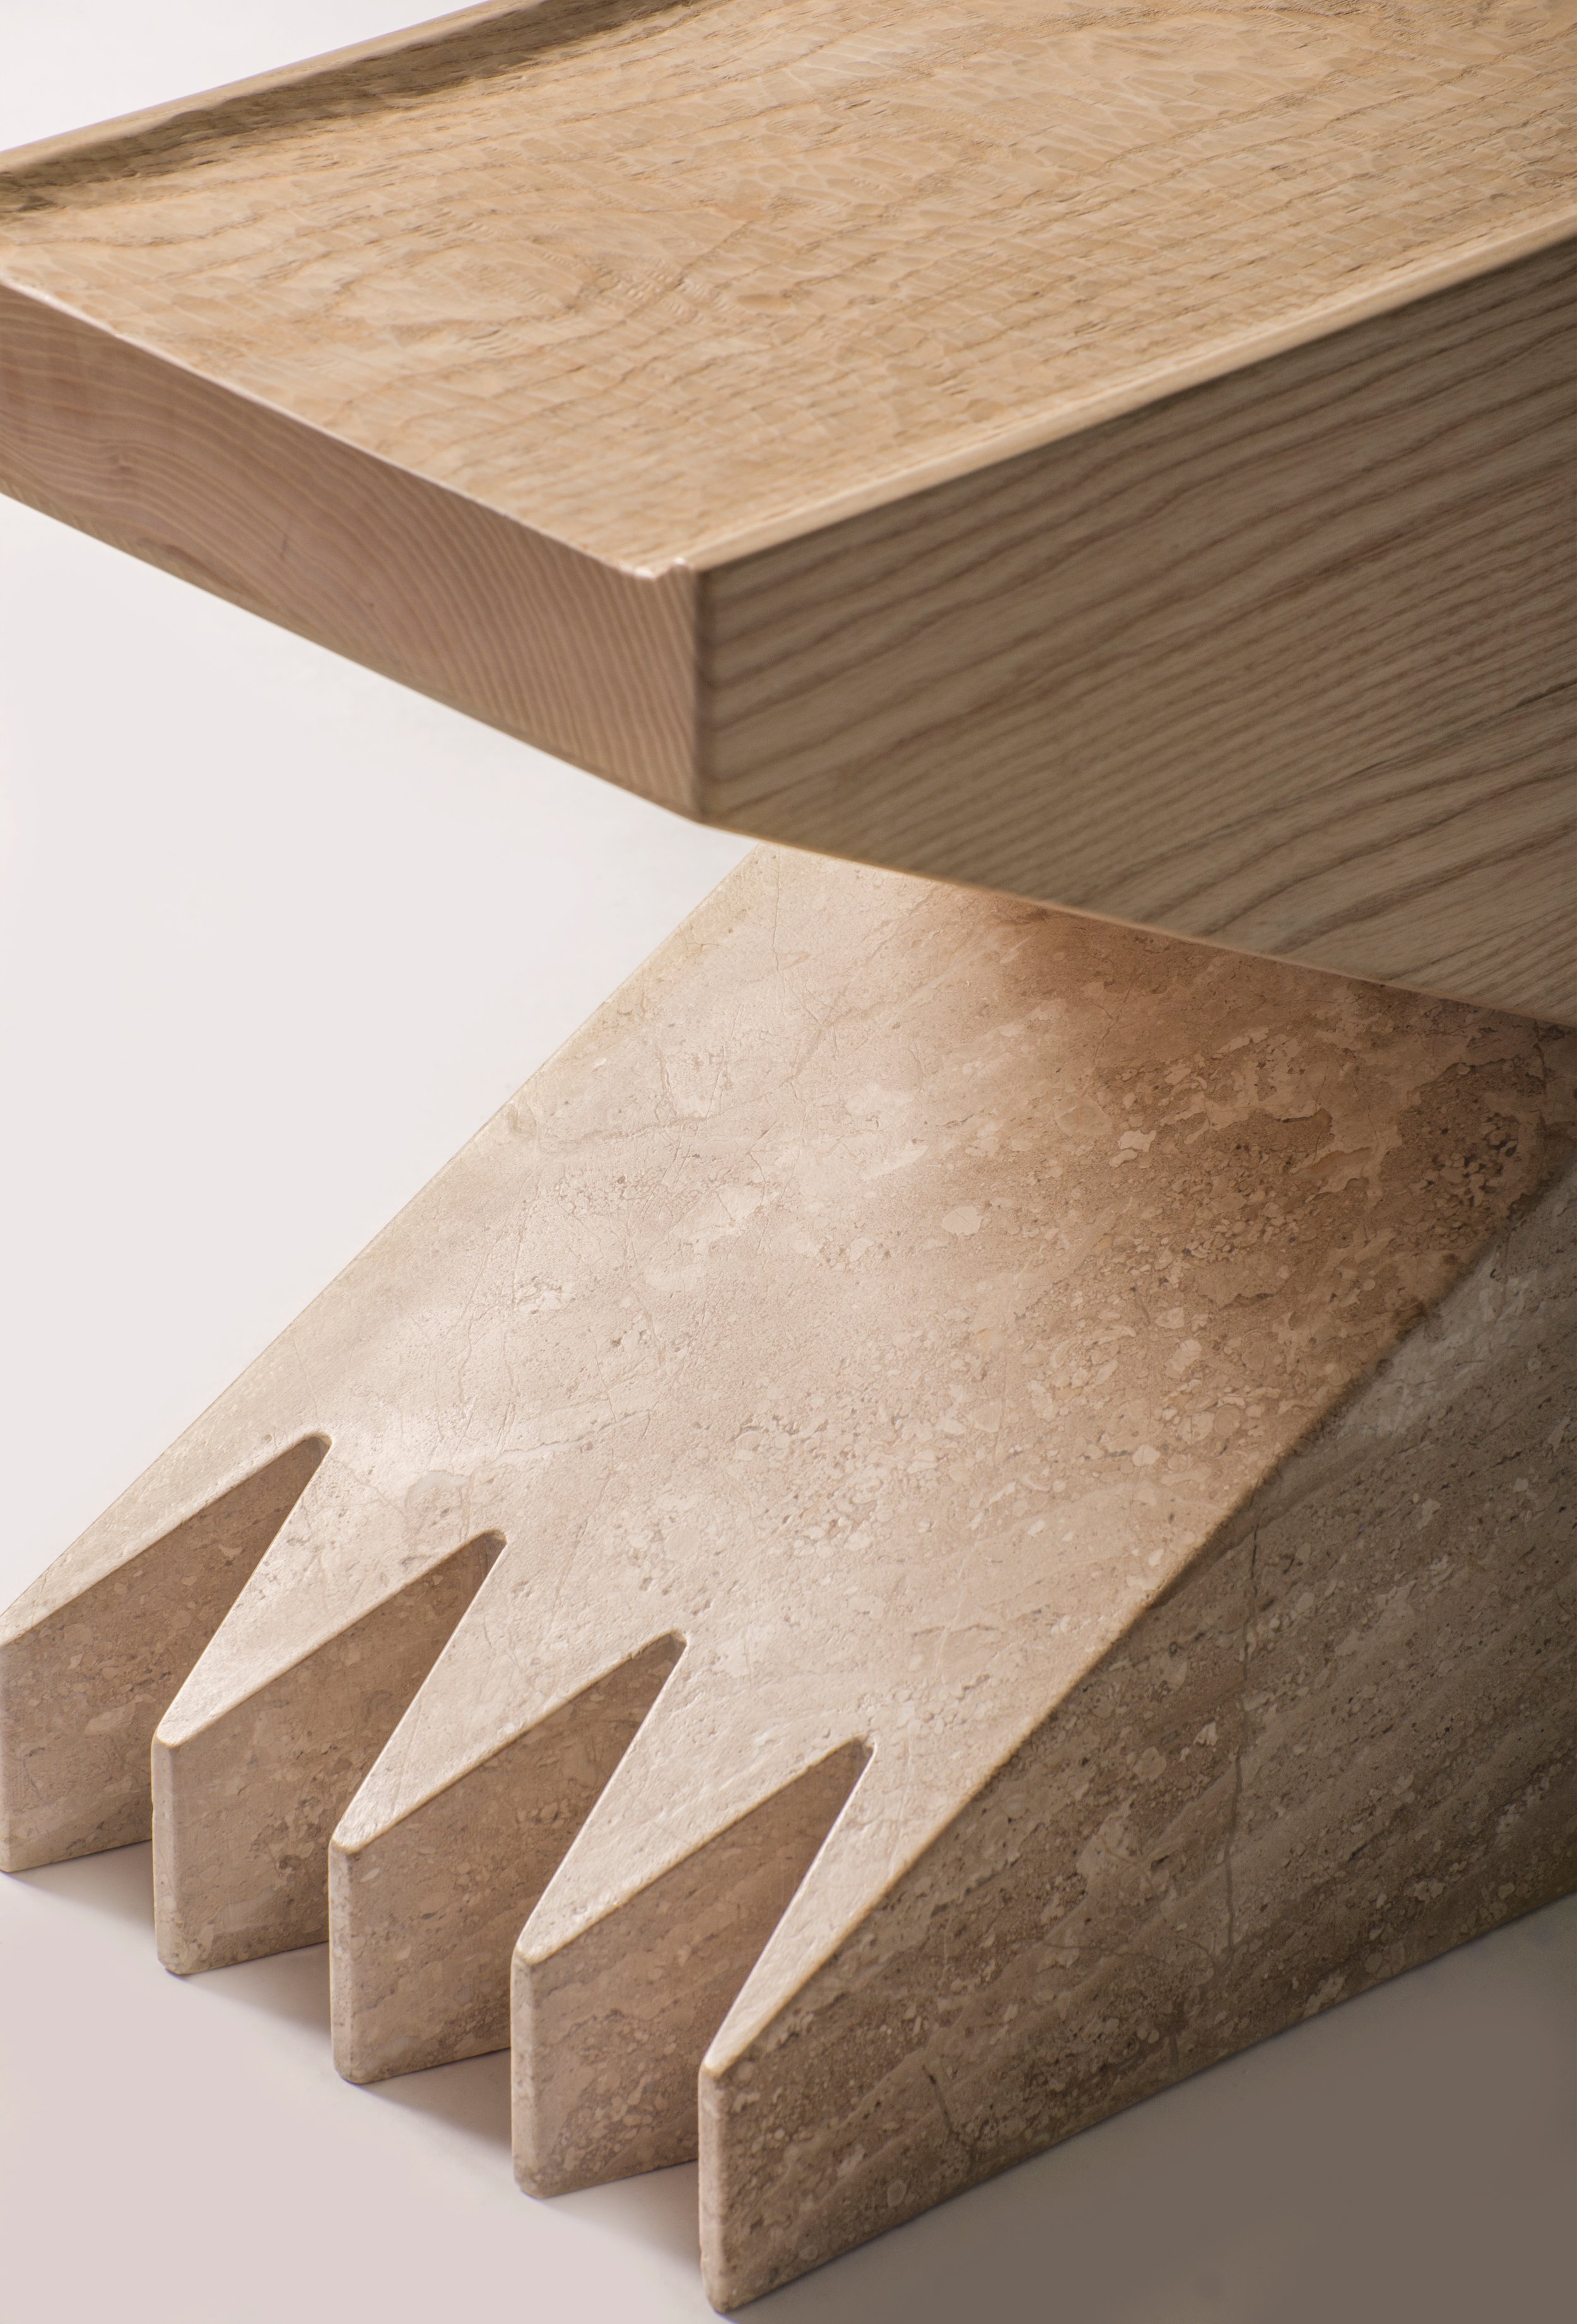 Mannu Side Table designed by Ambroise Maggiar, made by CP Basalti _ Karmine Piras for Pretziada_detail.jpg